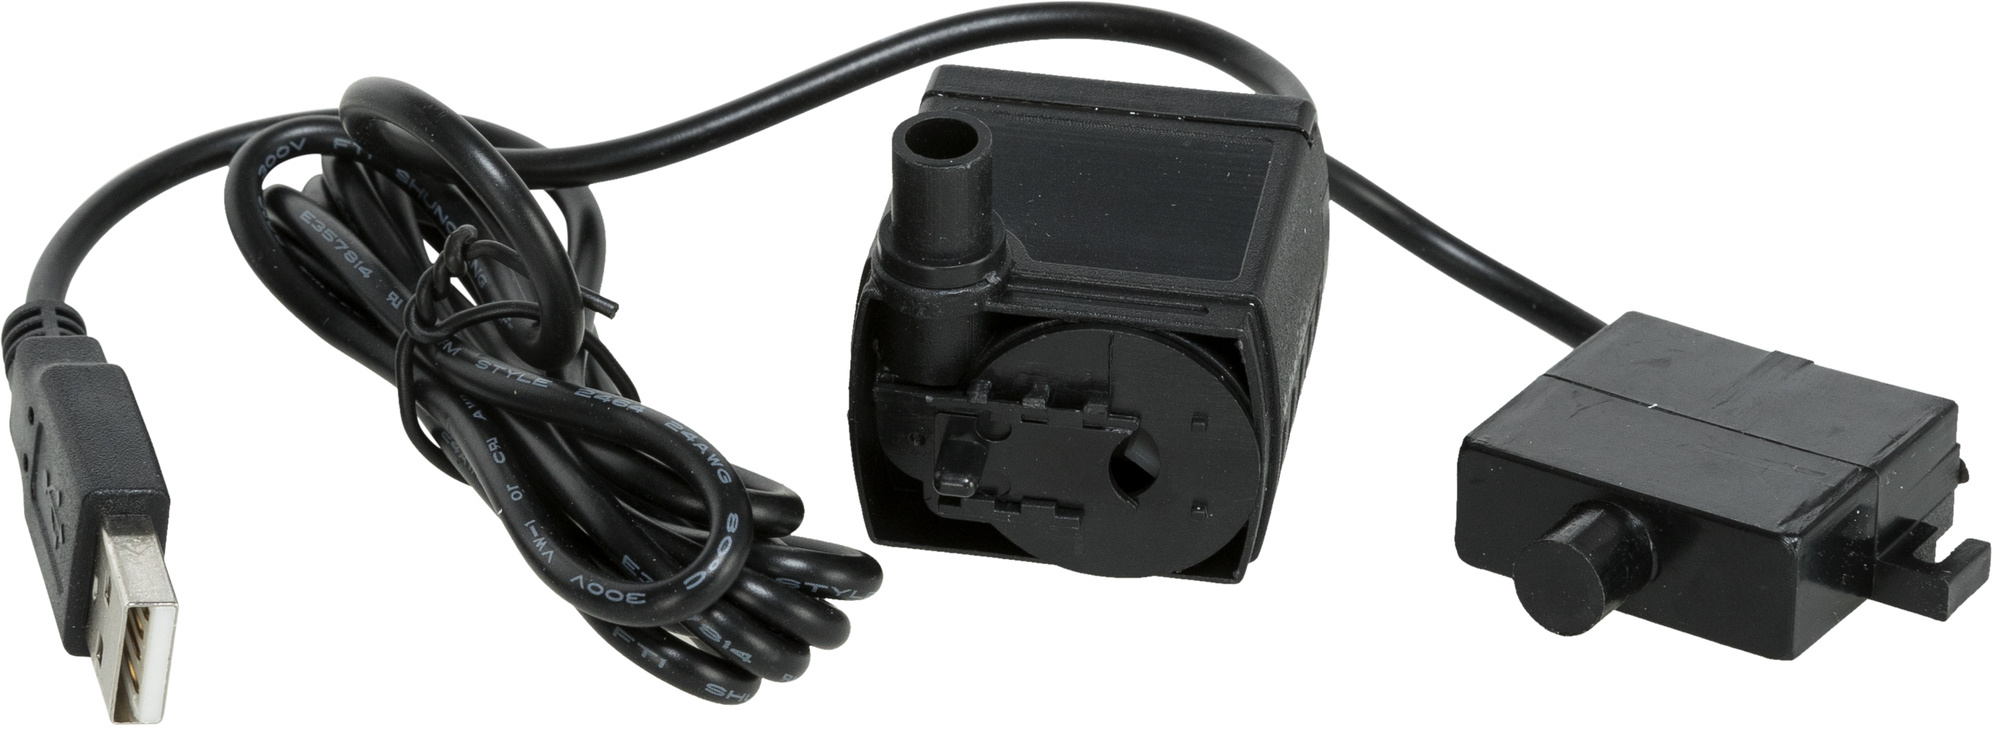 Pumpe für 24450 + Auto-Stopp, USB-Anschluss & Silikonst. - alfauna AG